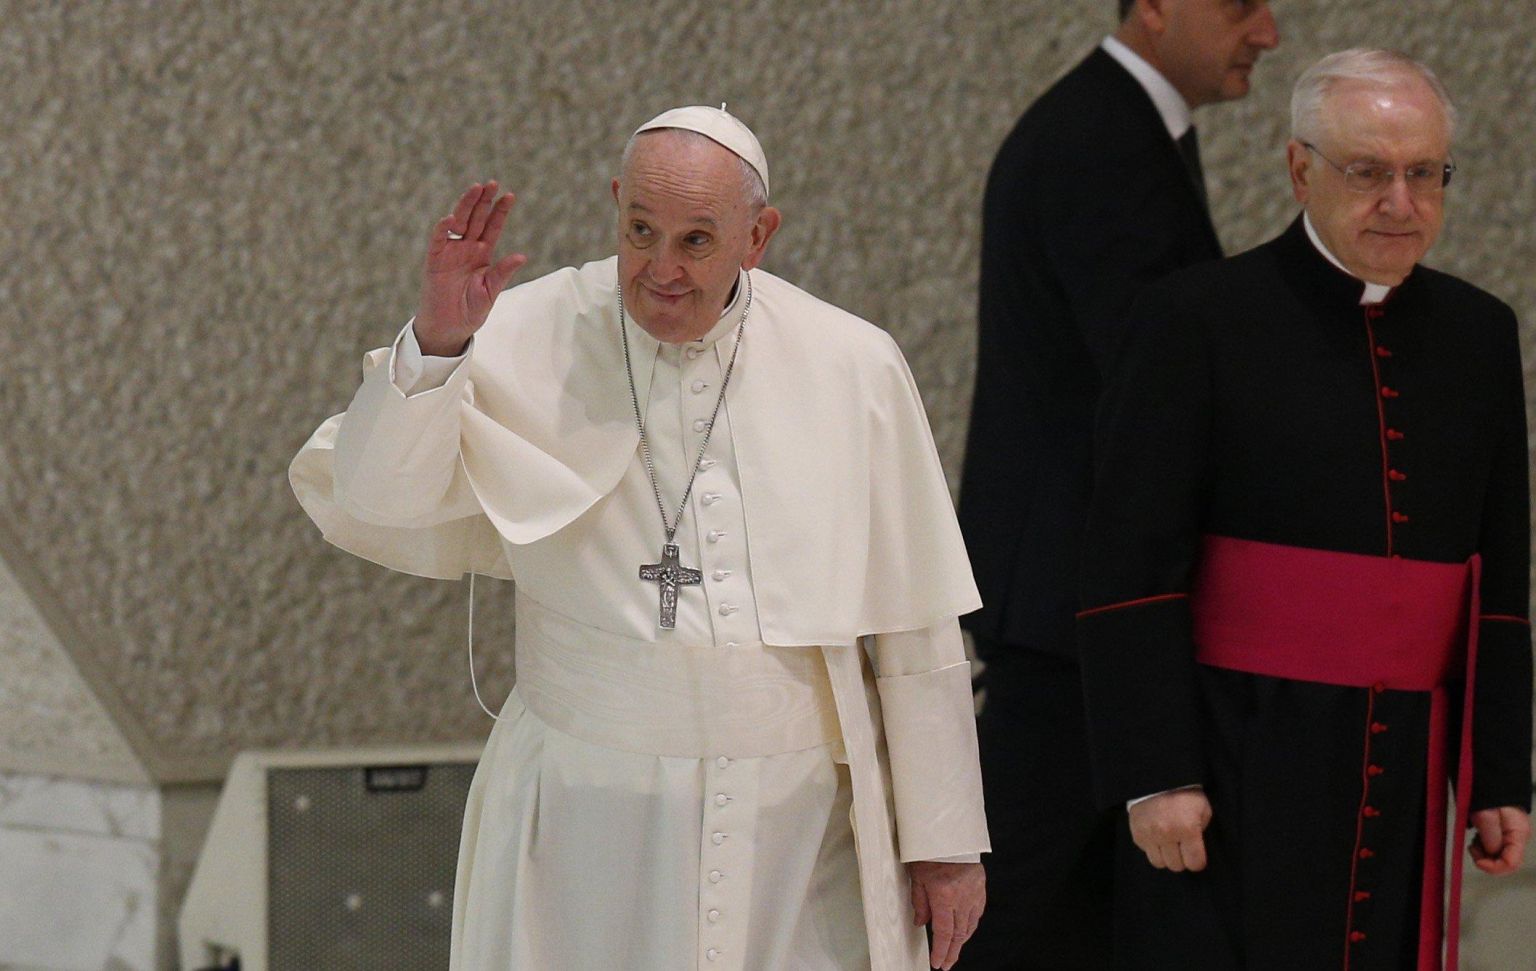 Kesalahan dan dosa manusia tidak membuat Tuhan takut, kata paus di hadapan hadirin